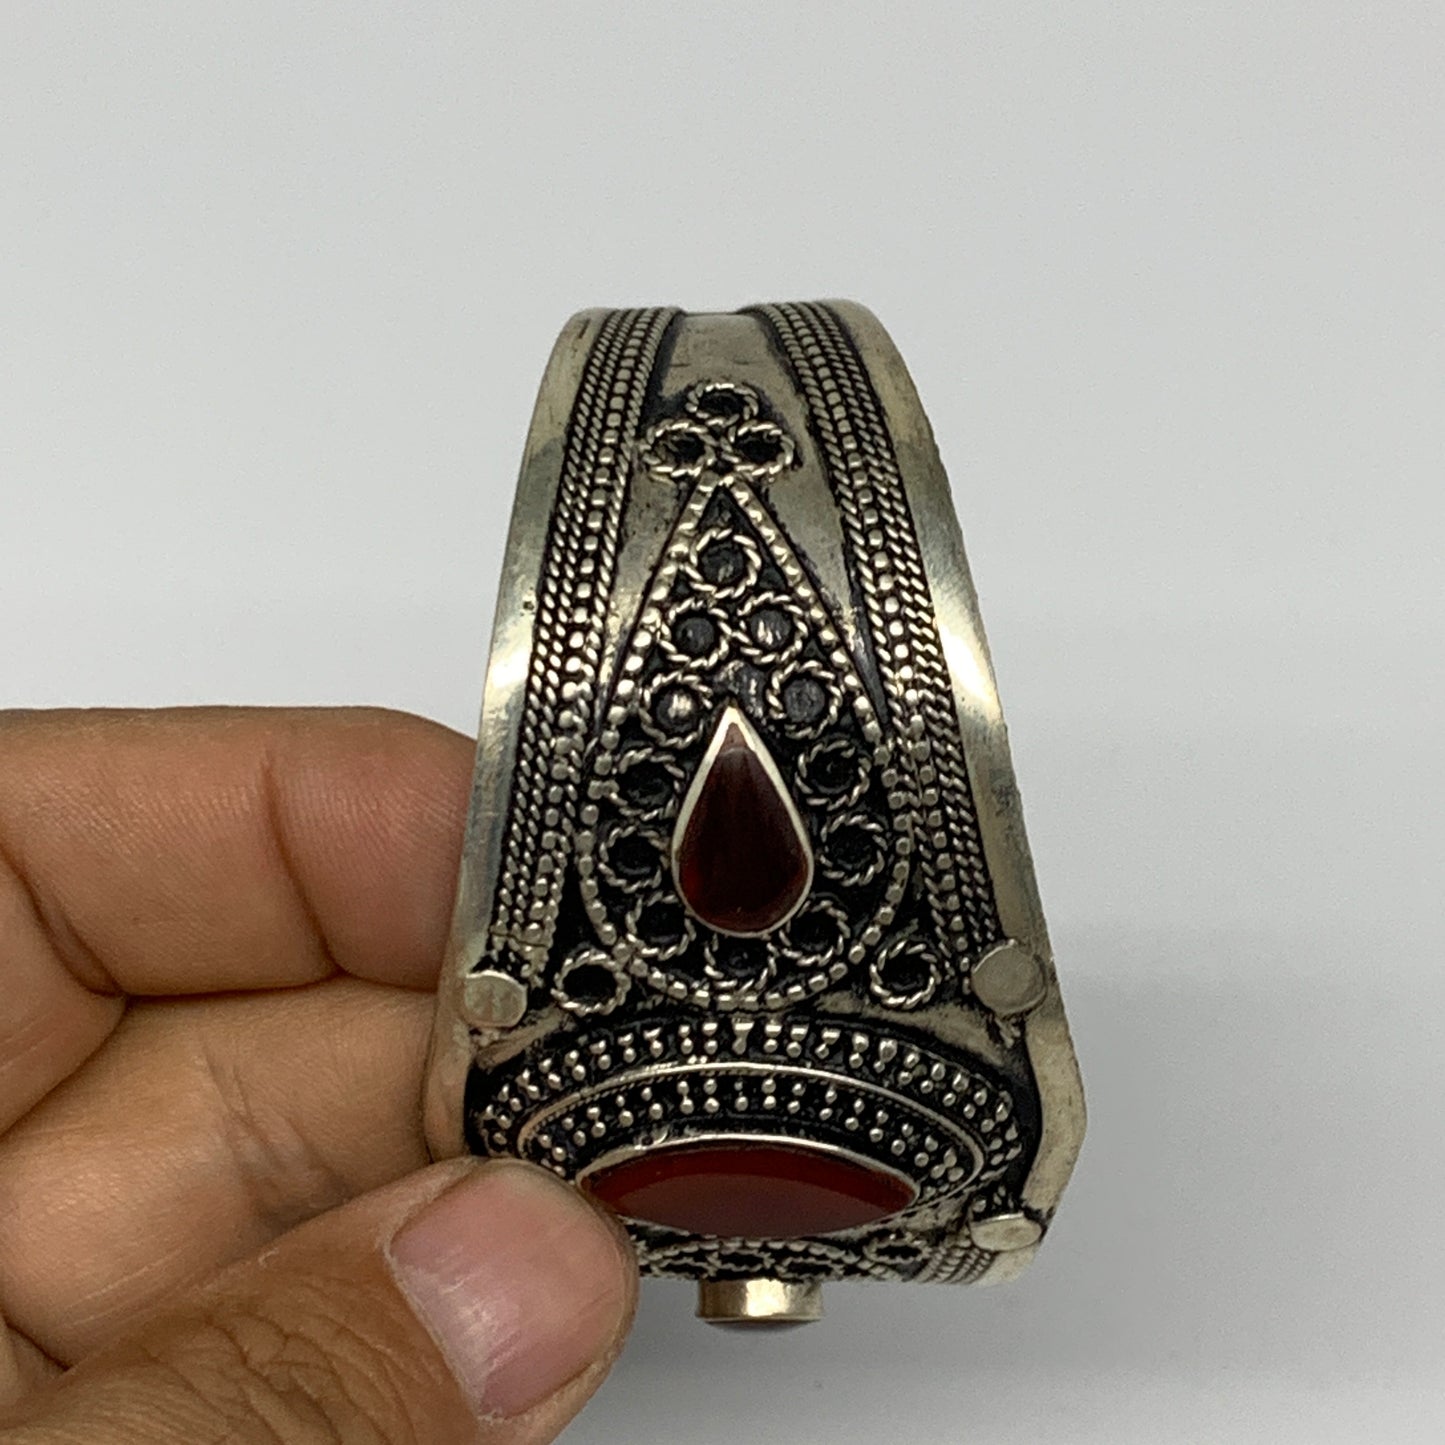 34.8g, 1.6" Red Carnelian Turkmen Cuff Bracelet Tribal Small Marquise, B13485